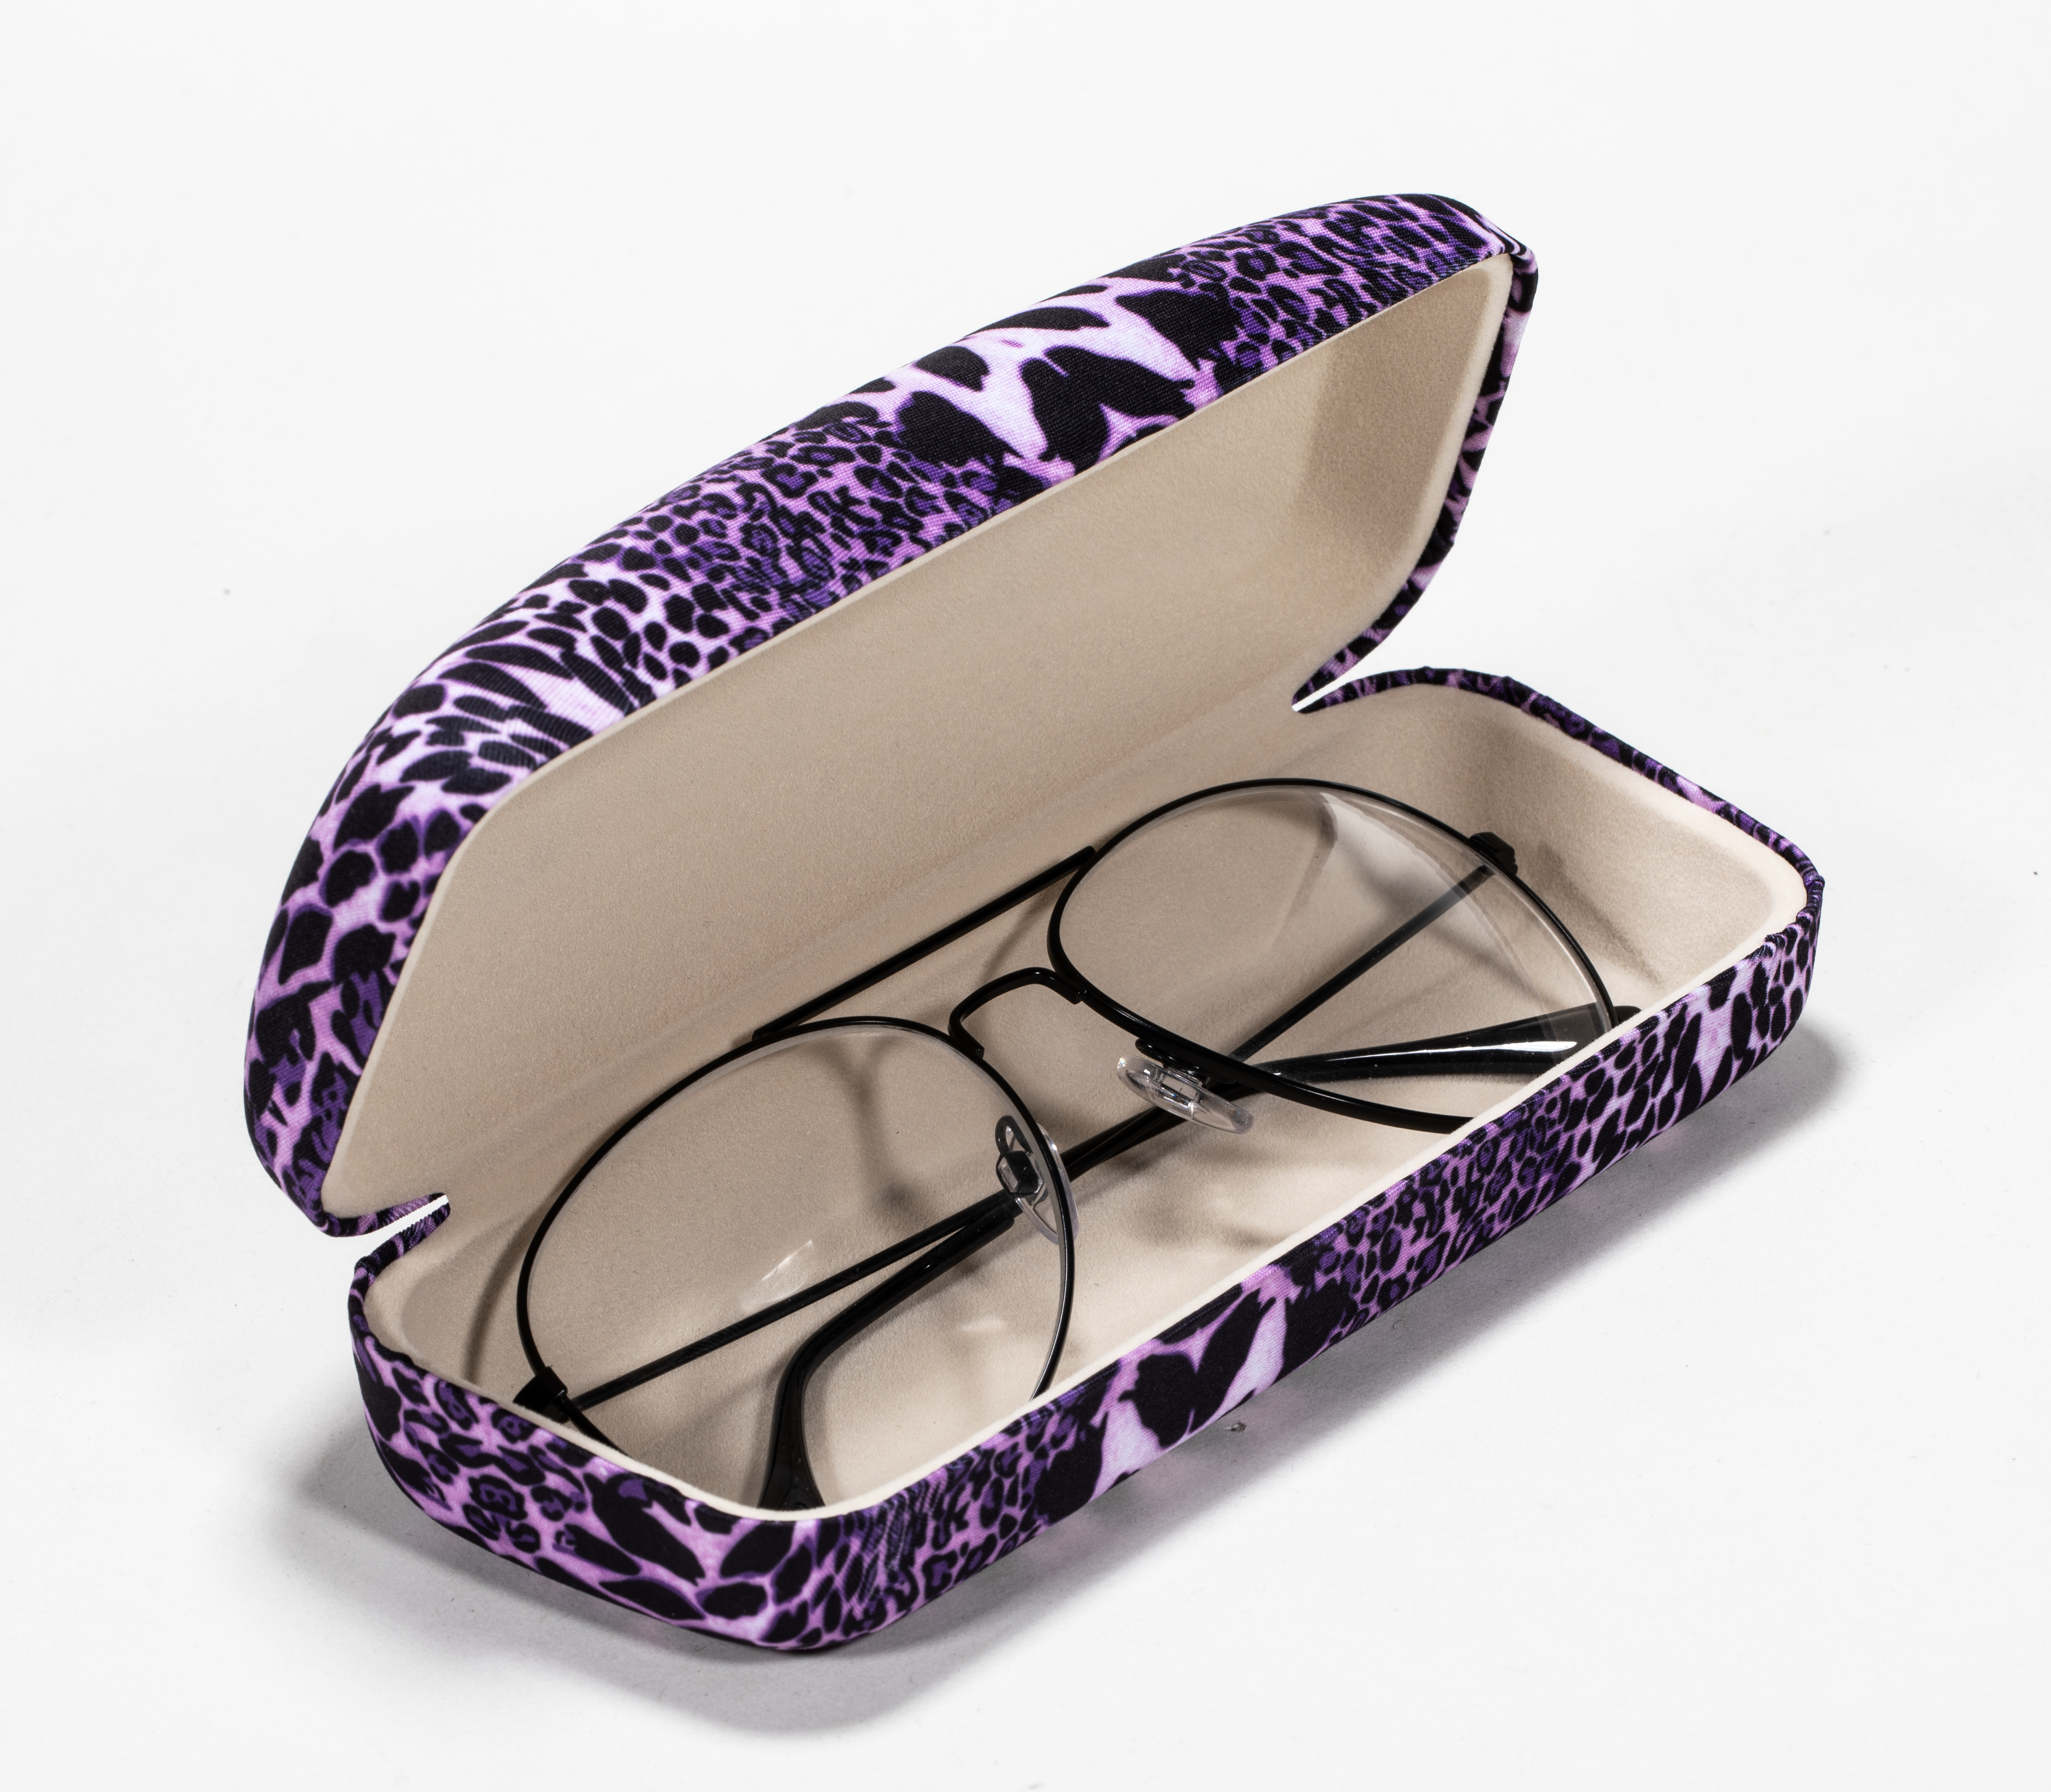 2021 glasses box iron box purple leopard print texture comfortable